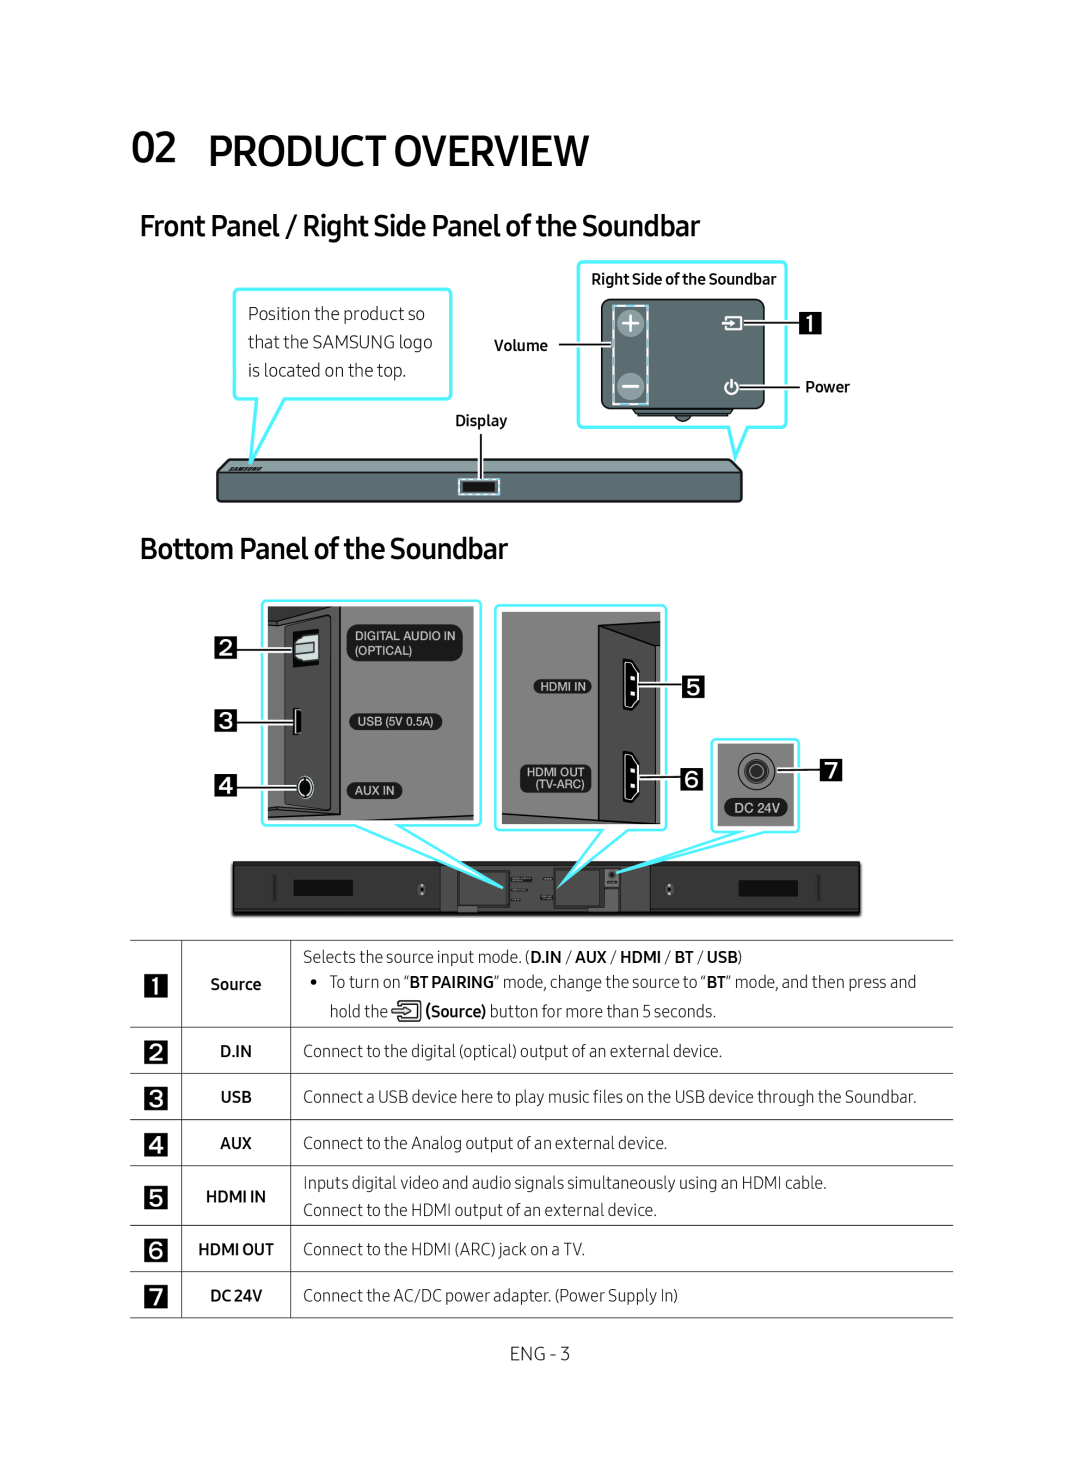 Front Panel / Right Side Panel of the Soundbar Standard HW-M430